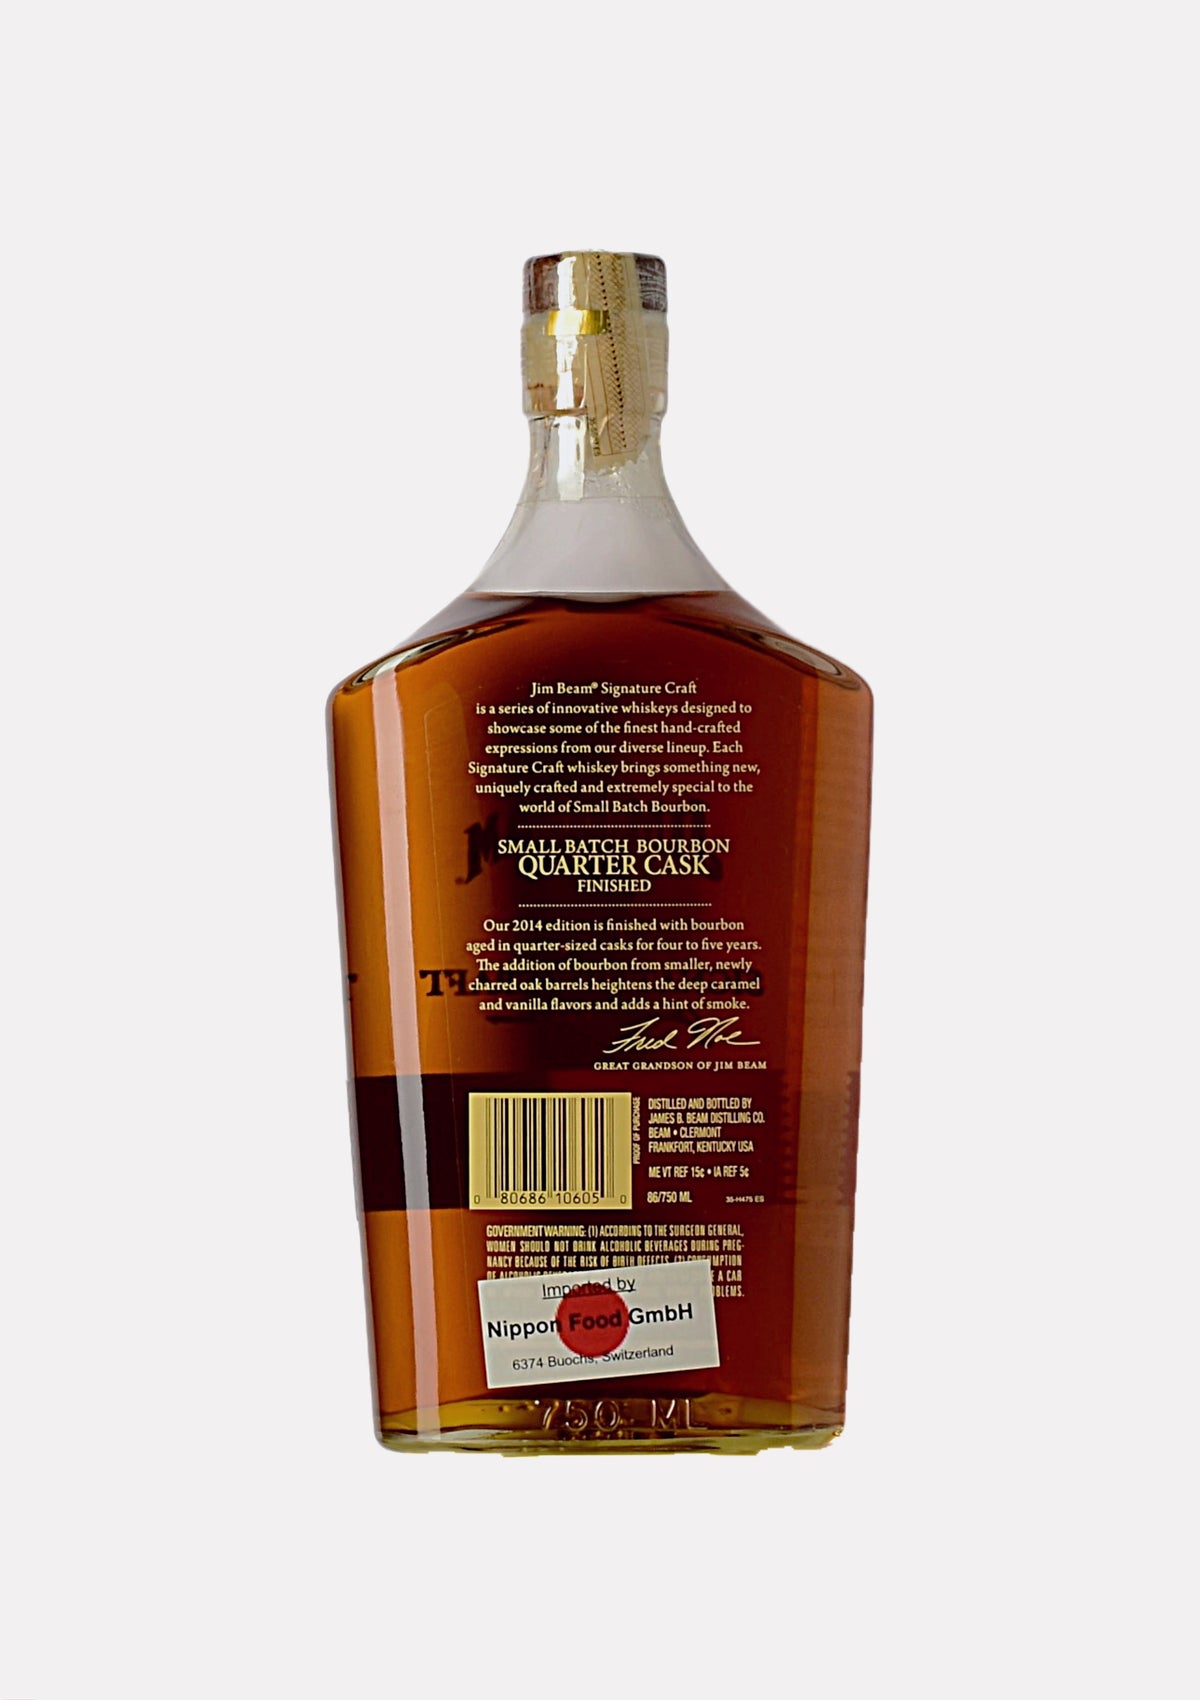 Jim Beam Signature Craft Quarter Cask Finished Kentucky Straight Bourbon Whiskey